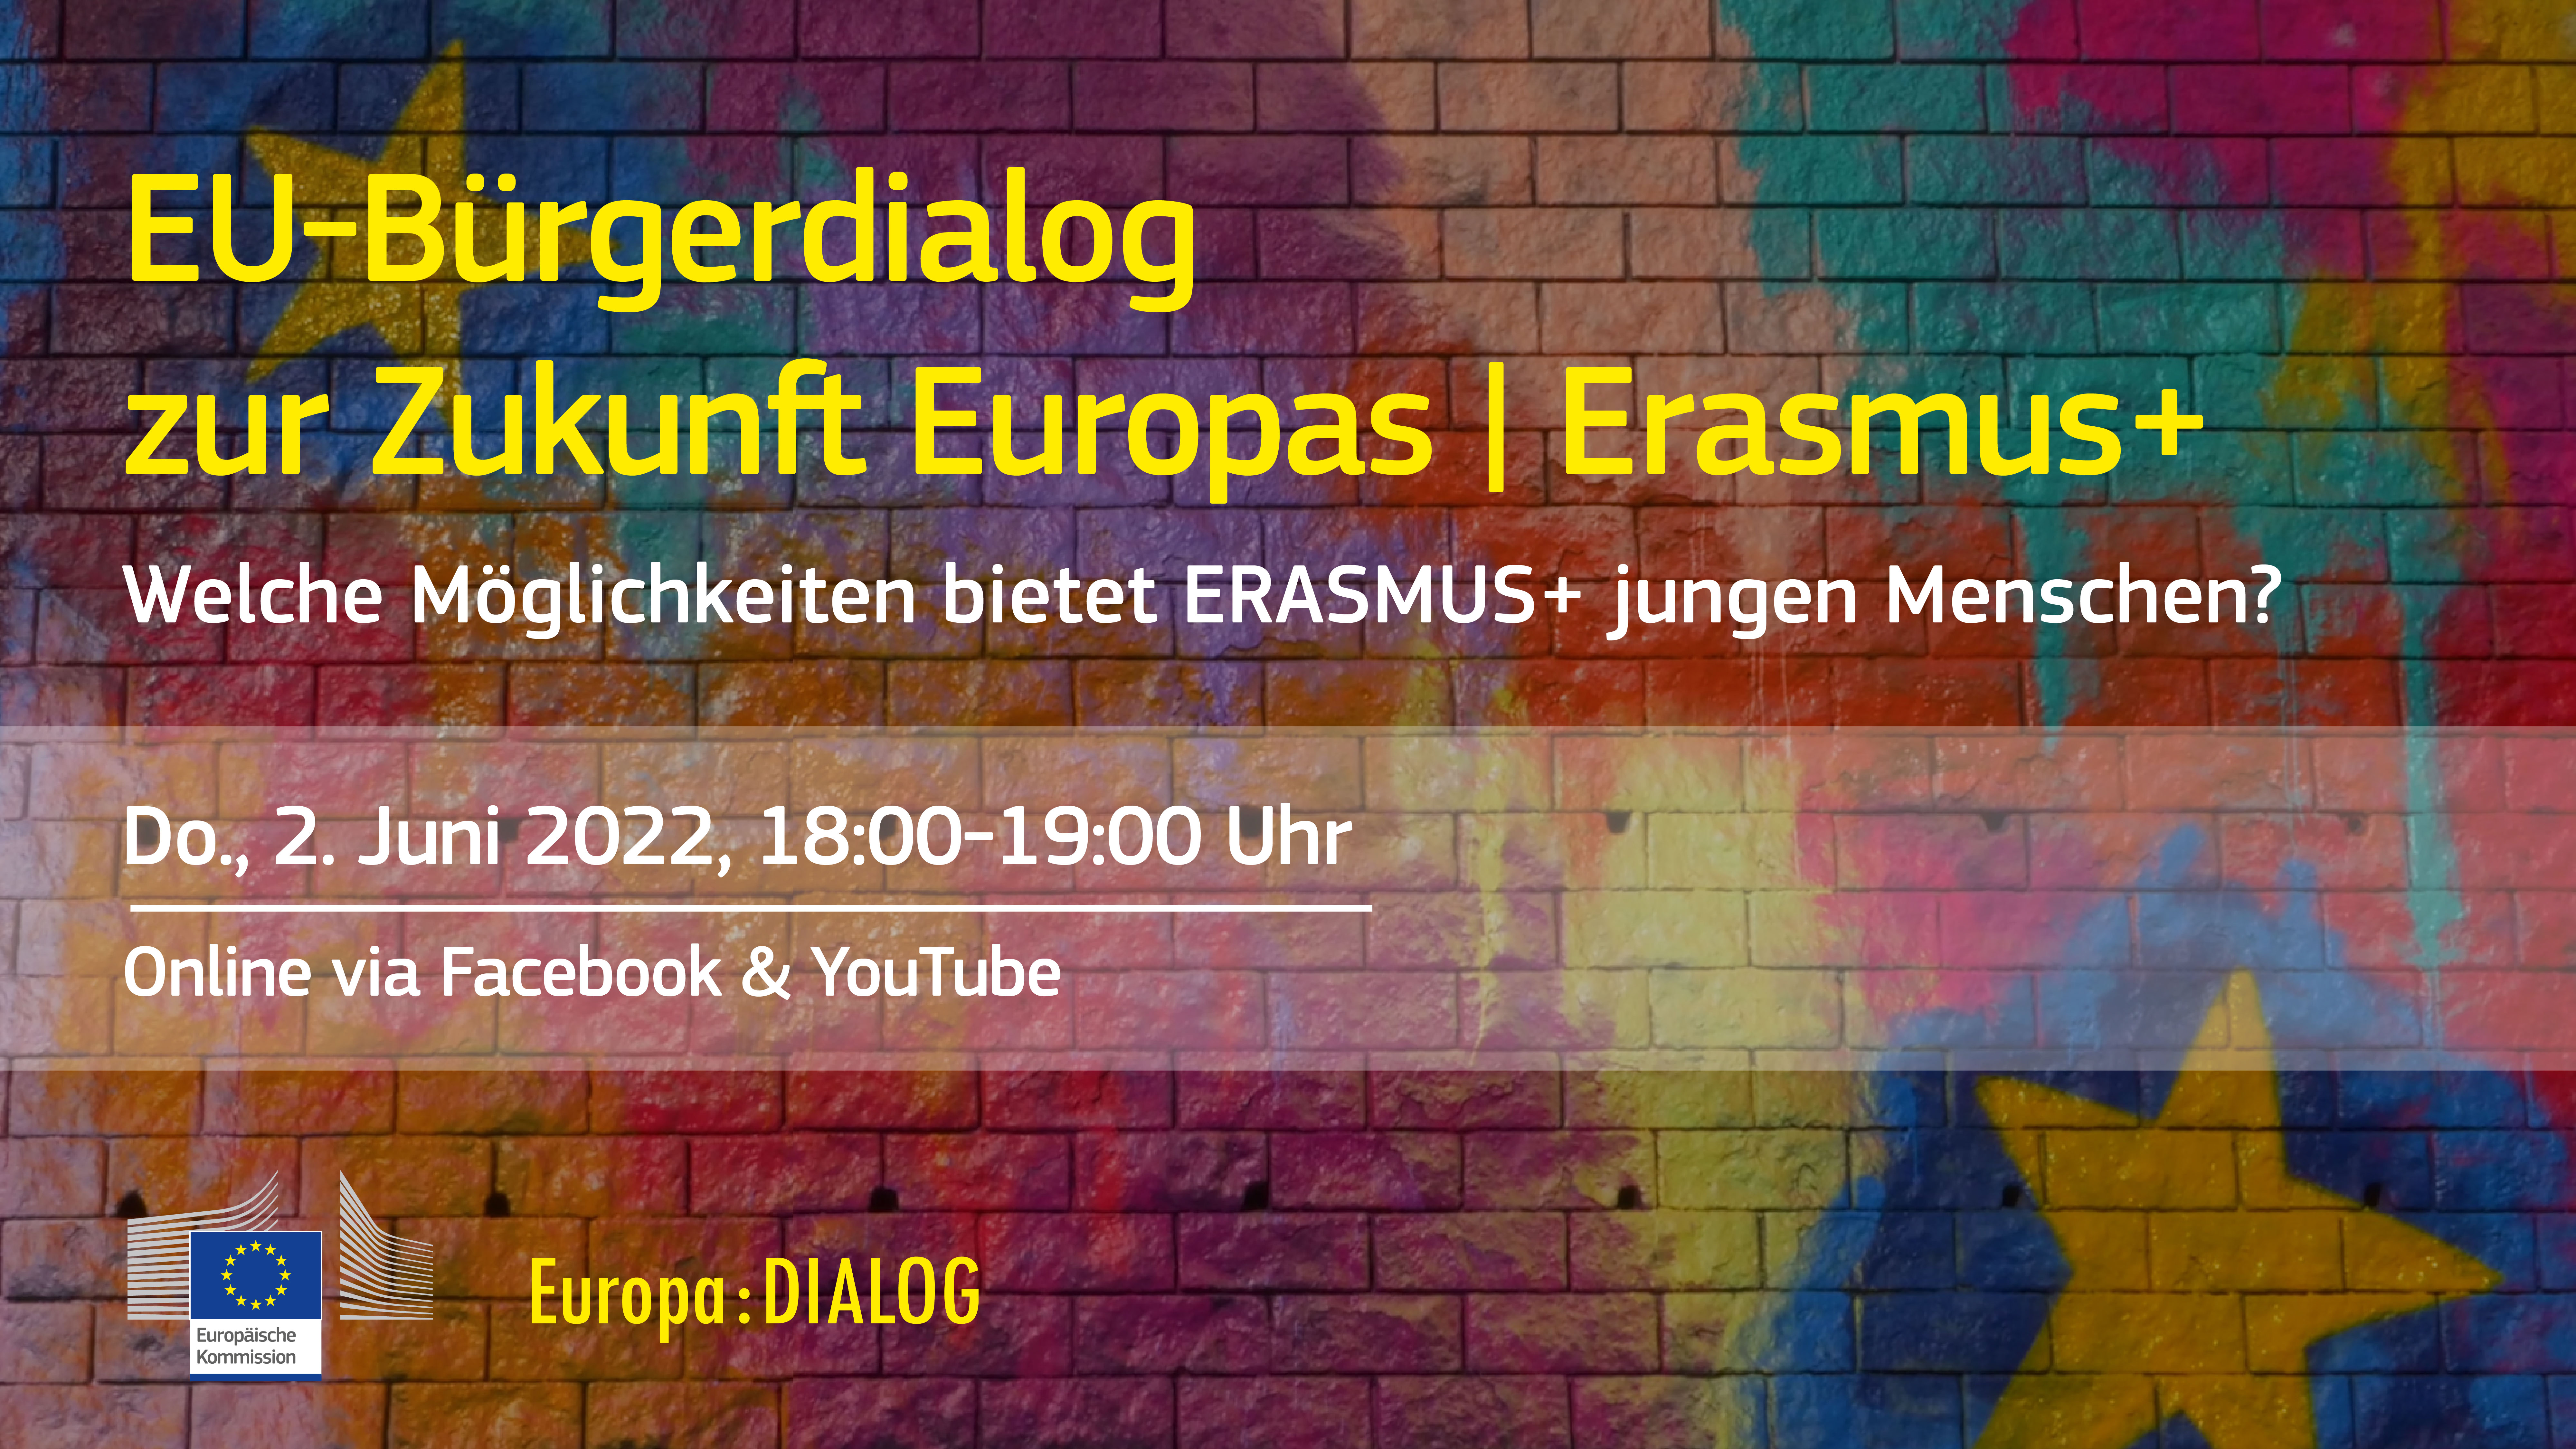 Europa : DIALOG | Erasmus+ | EU-Bürgerdialog zur Zukunft Europas